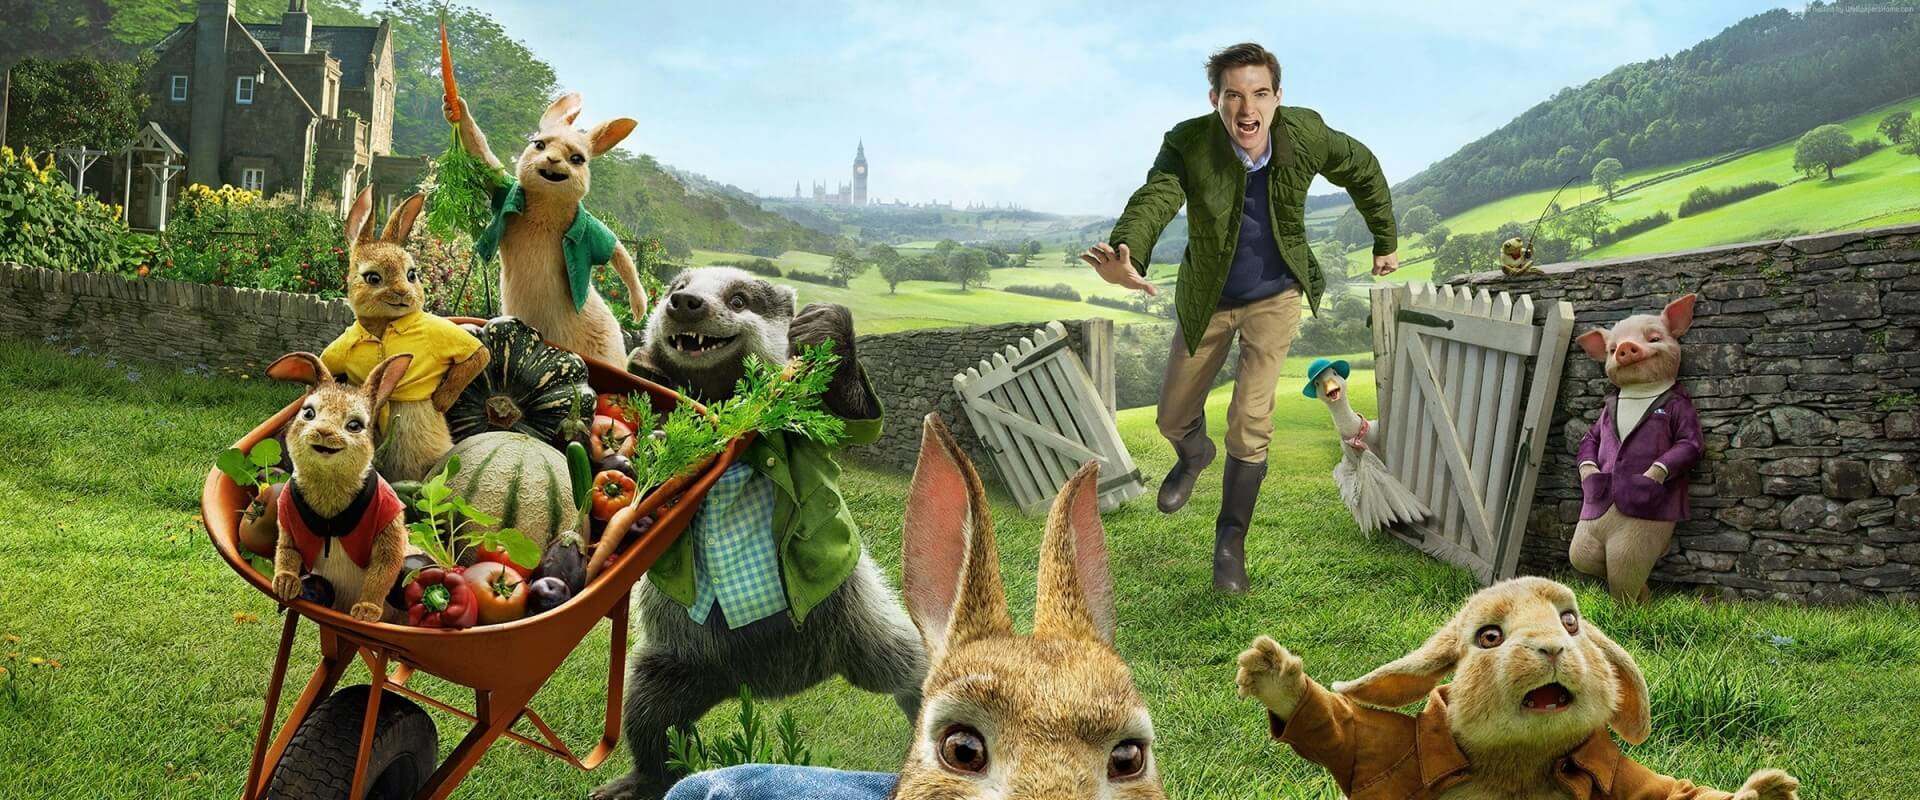 Peter Rabbit background 2